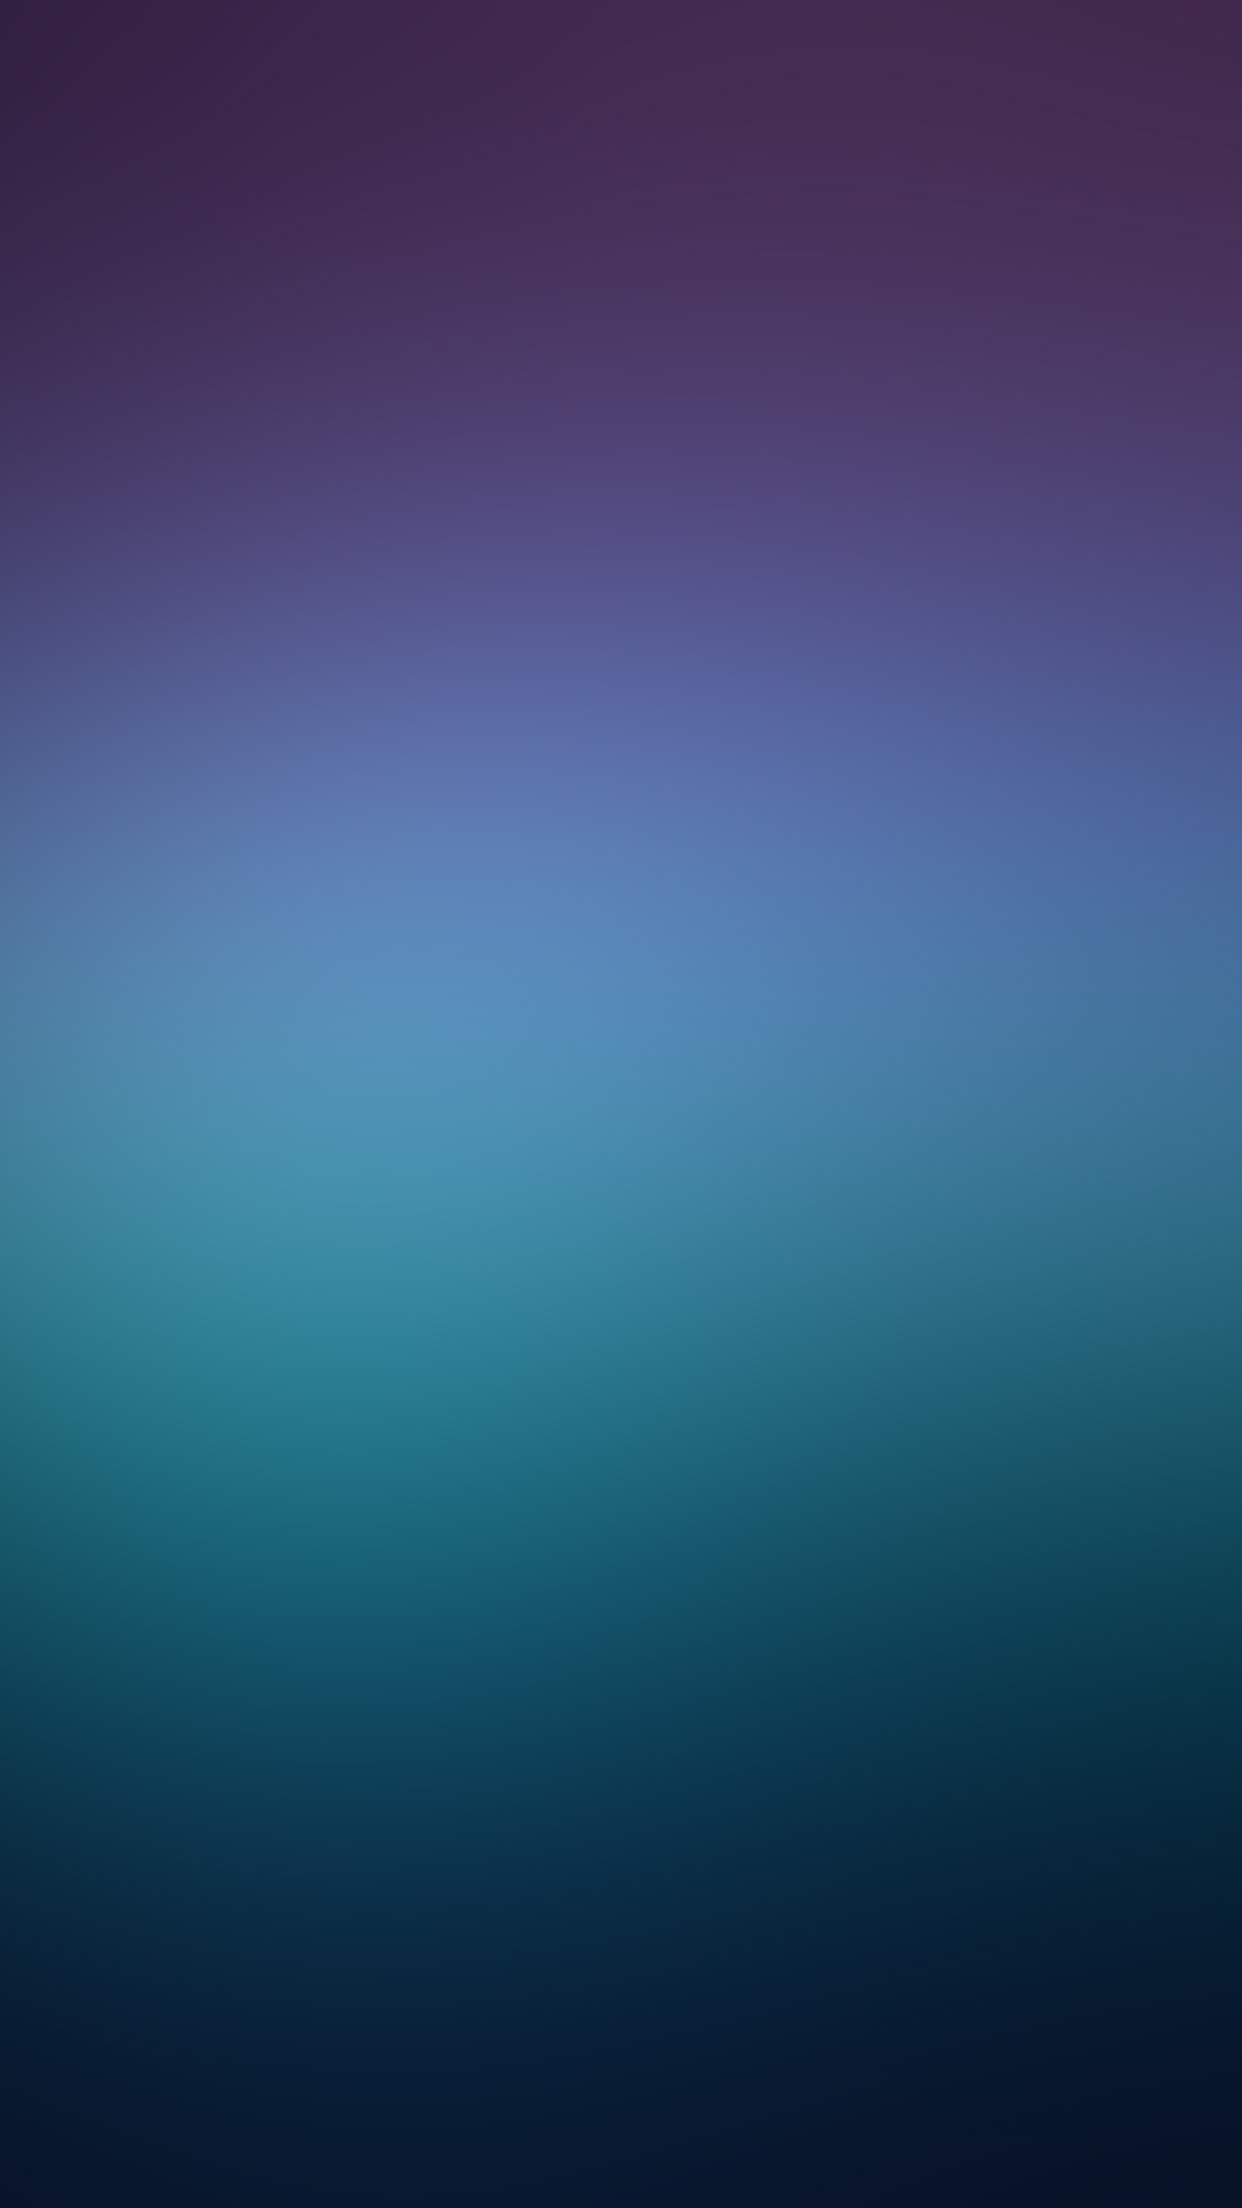 Blue Purple Soft Gradation Blur Wallpaper